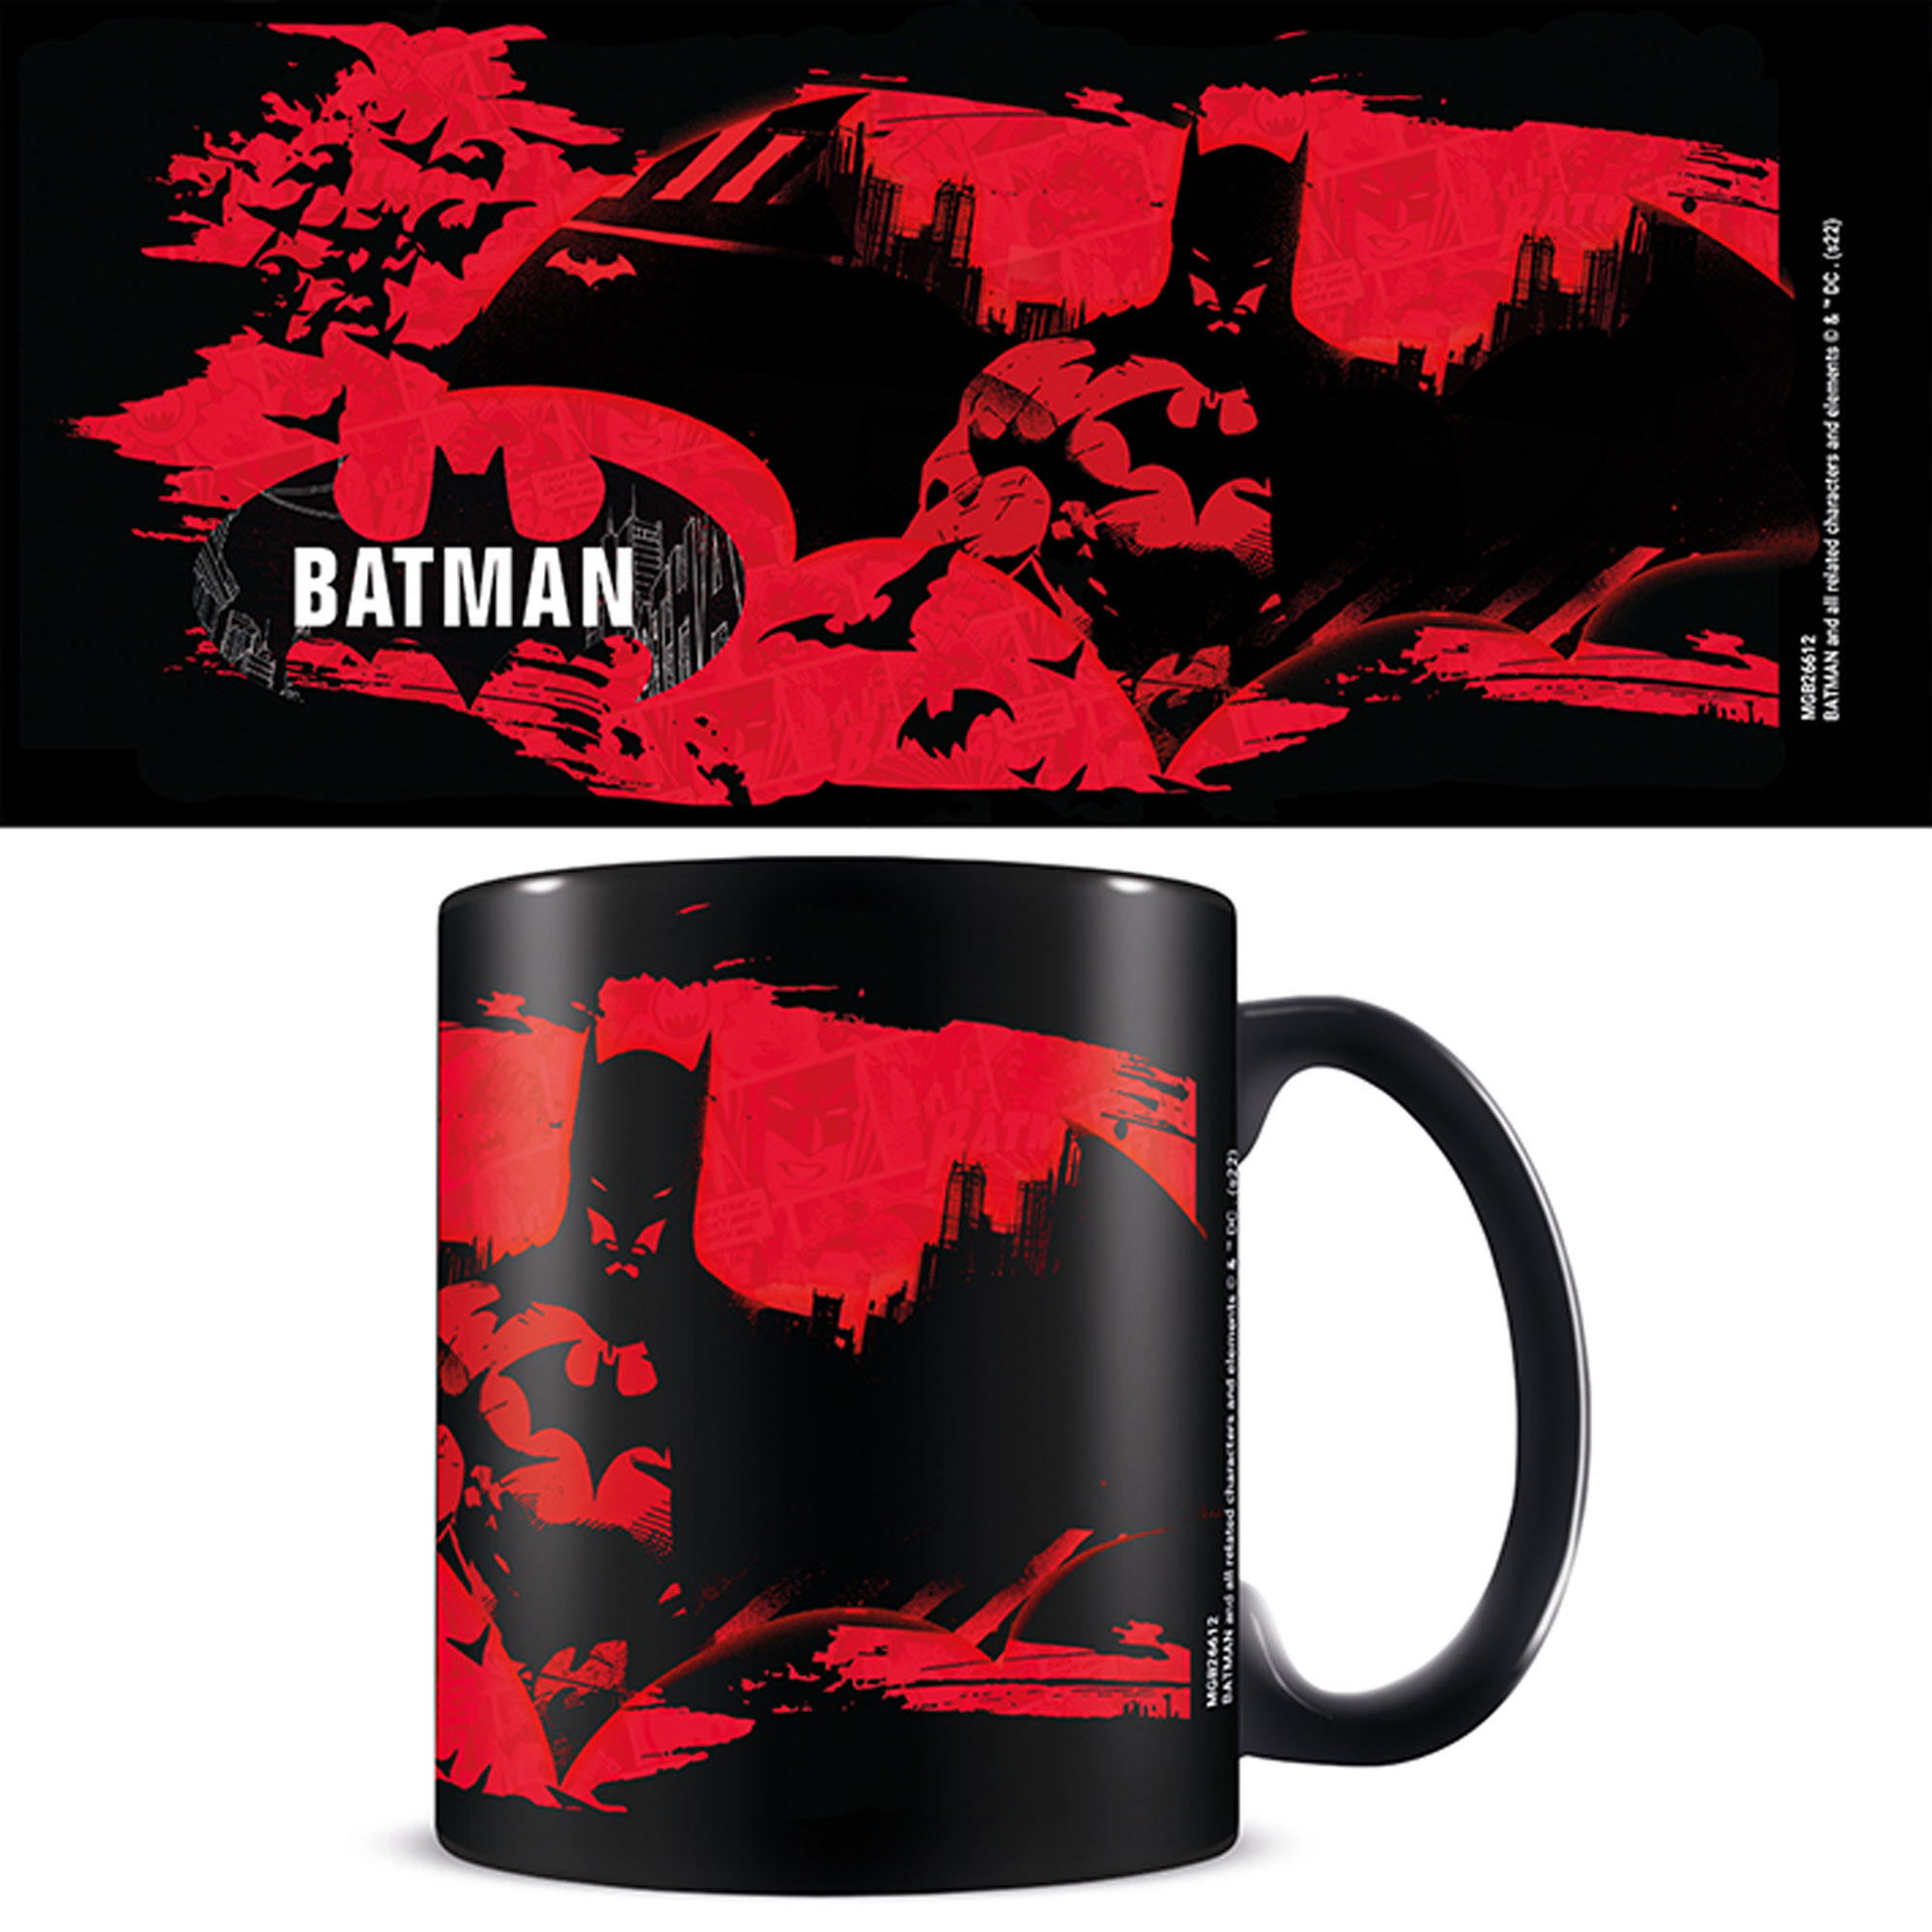 Batman - Mug black Red -